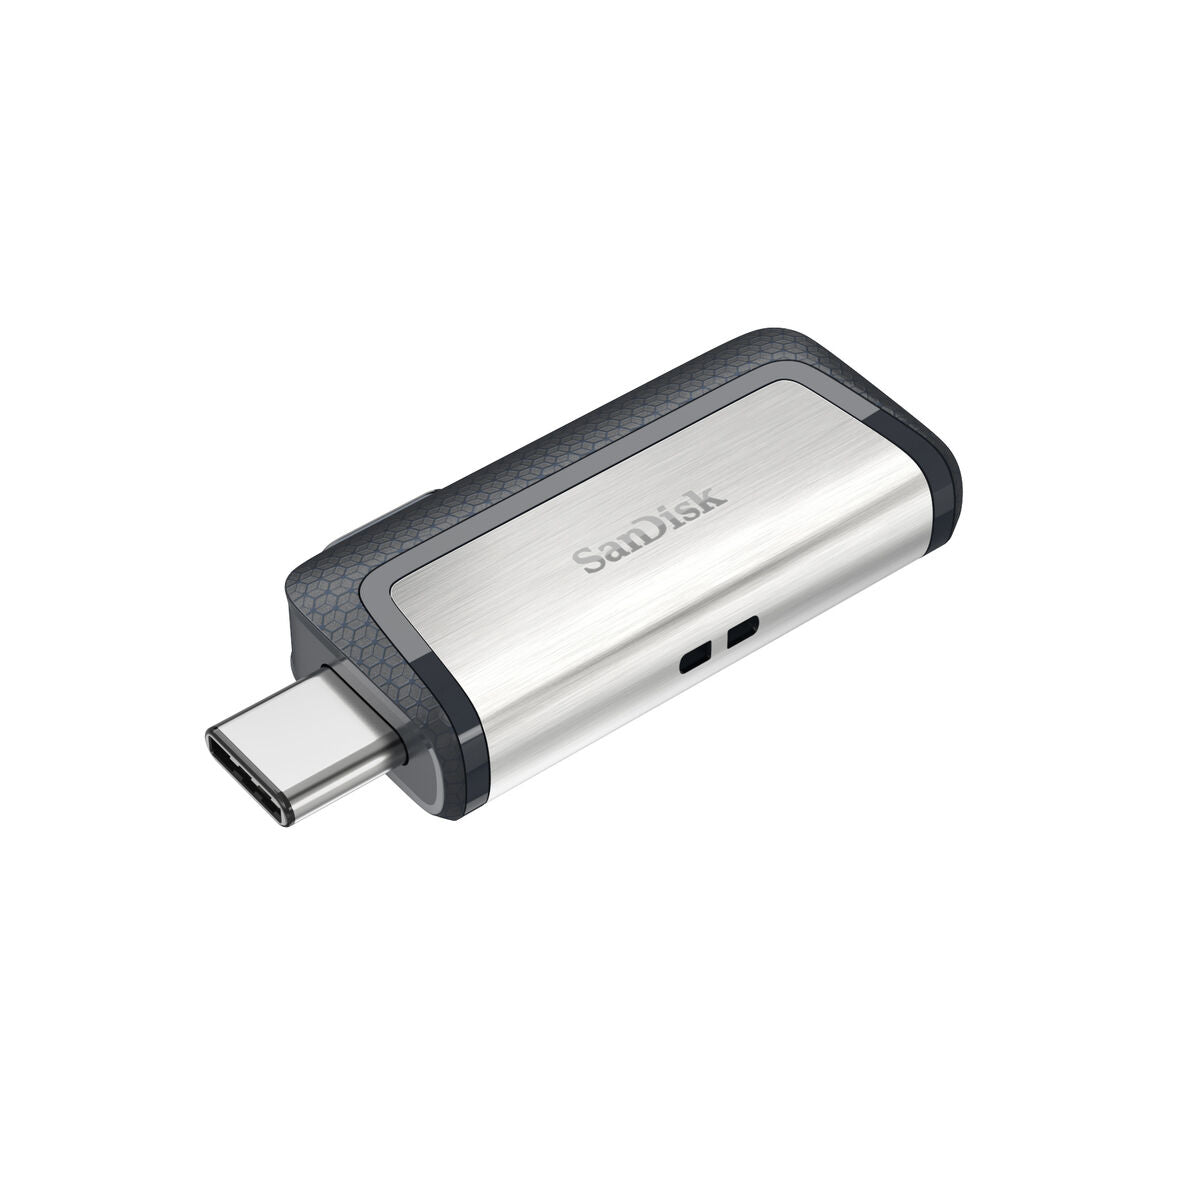 USB stick SanDisk SDDDC2-128G-G46 Black Black/Silver Silver 128 GB